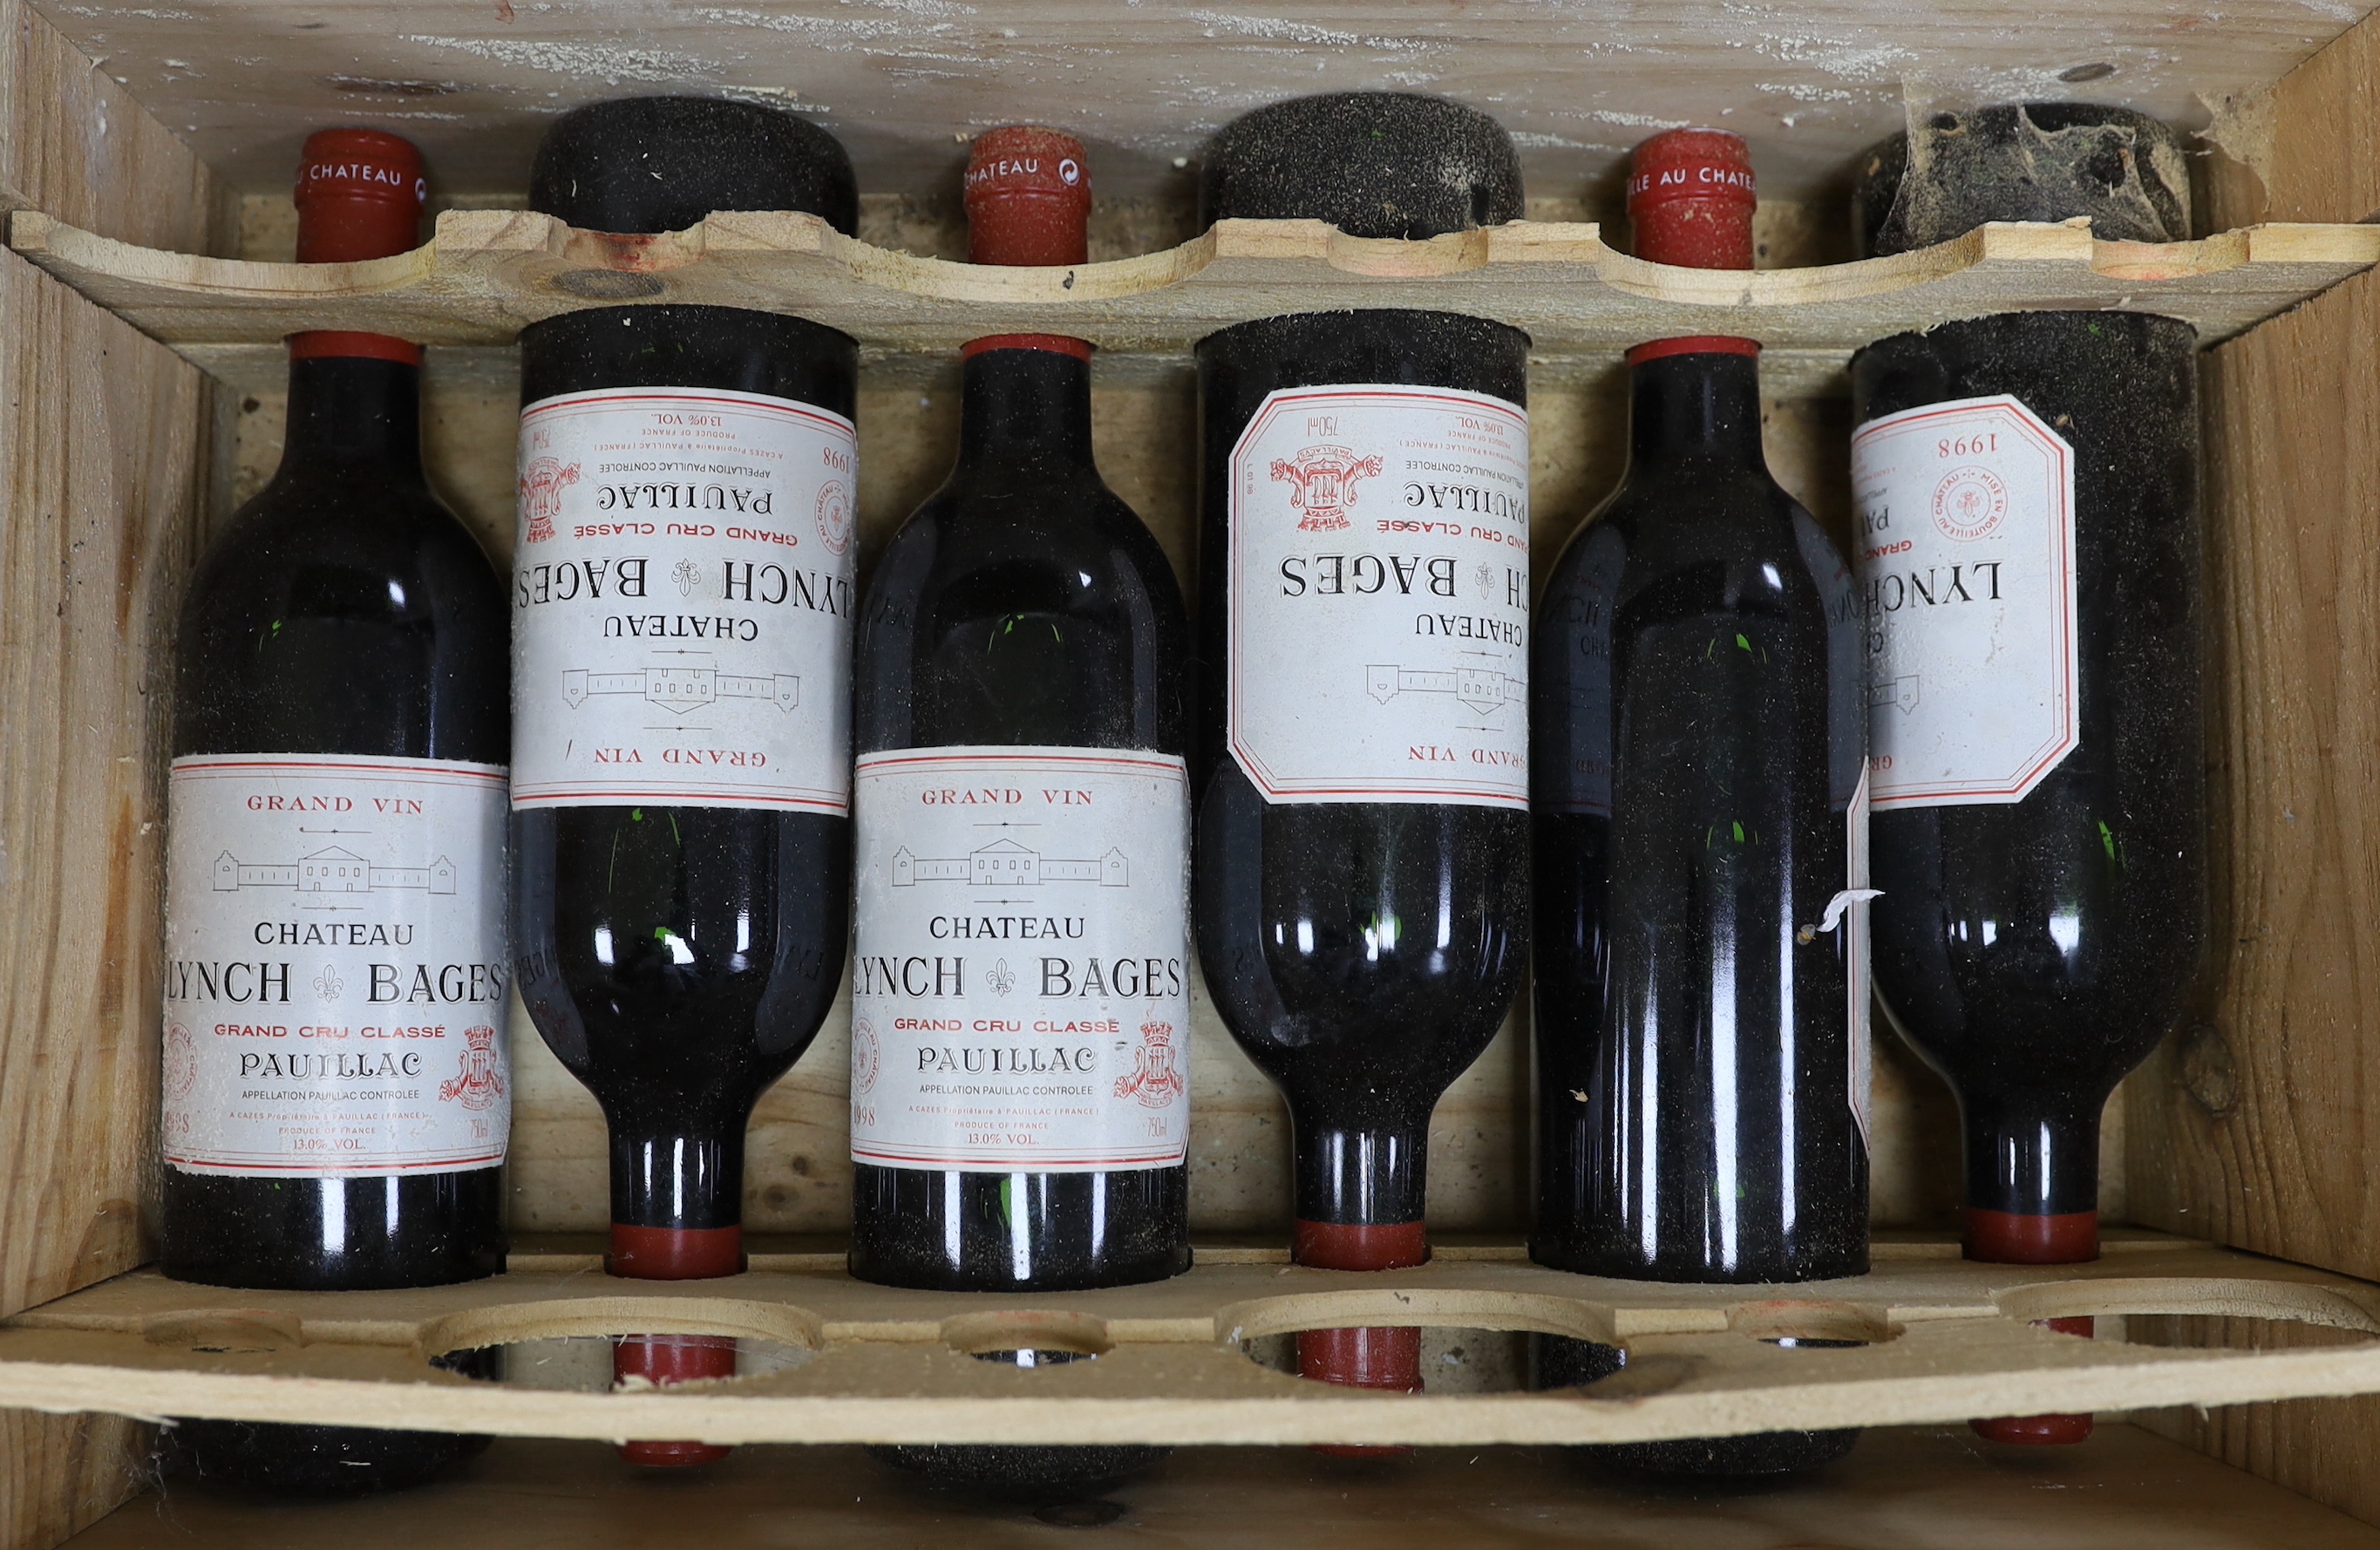 Seven bottles of Château Lynch Bages, Pauillac 1998